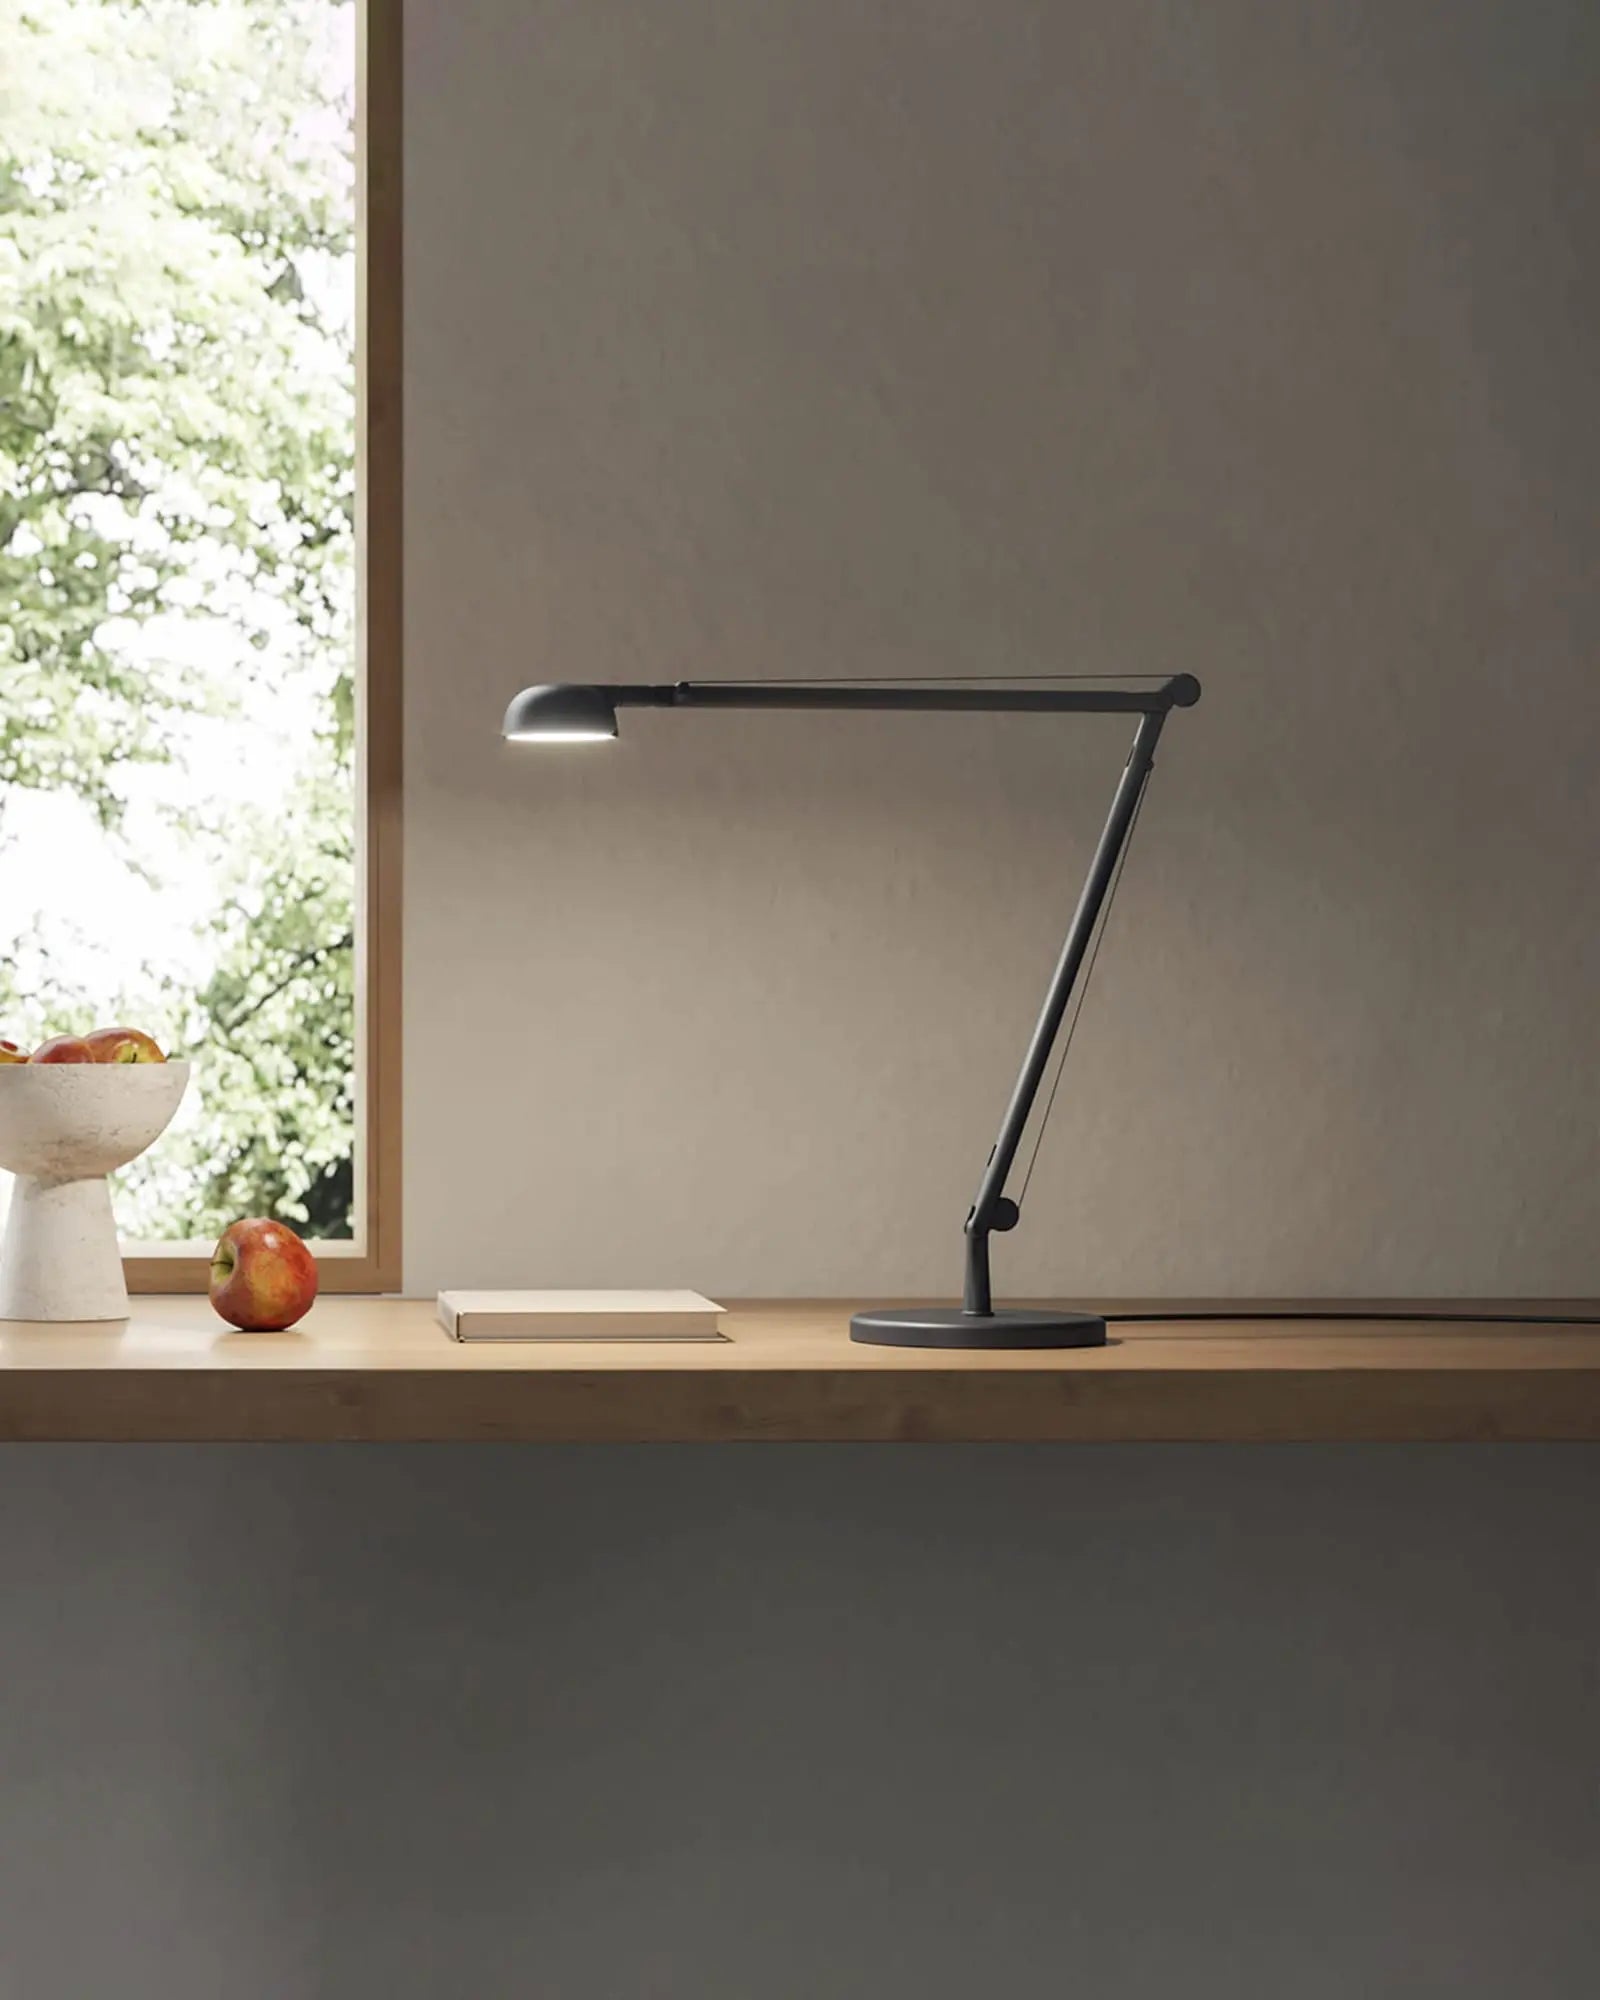 Optunia contemporary adjustable table lamp on a shelf